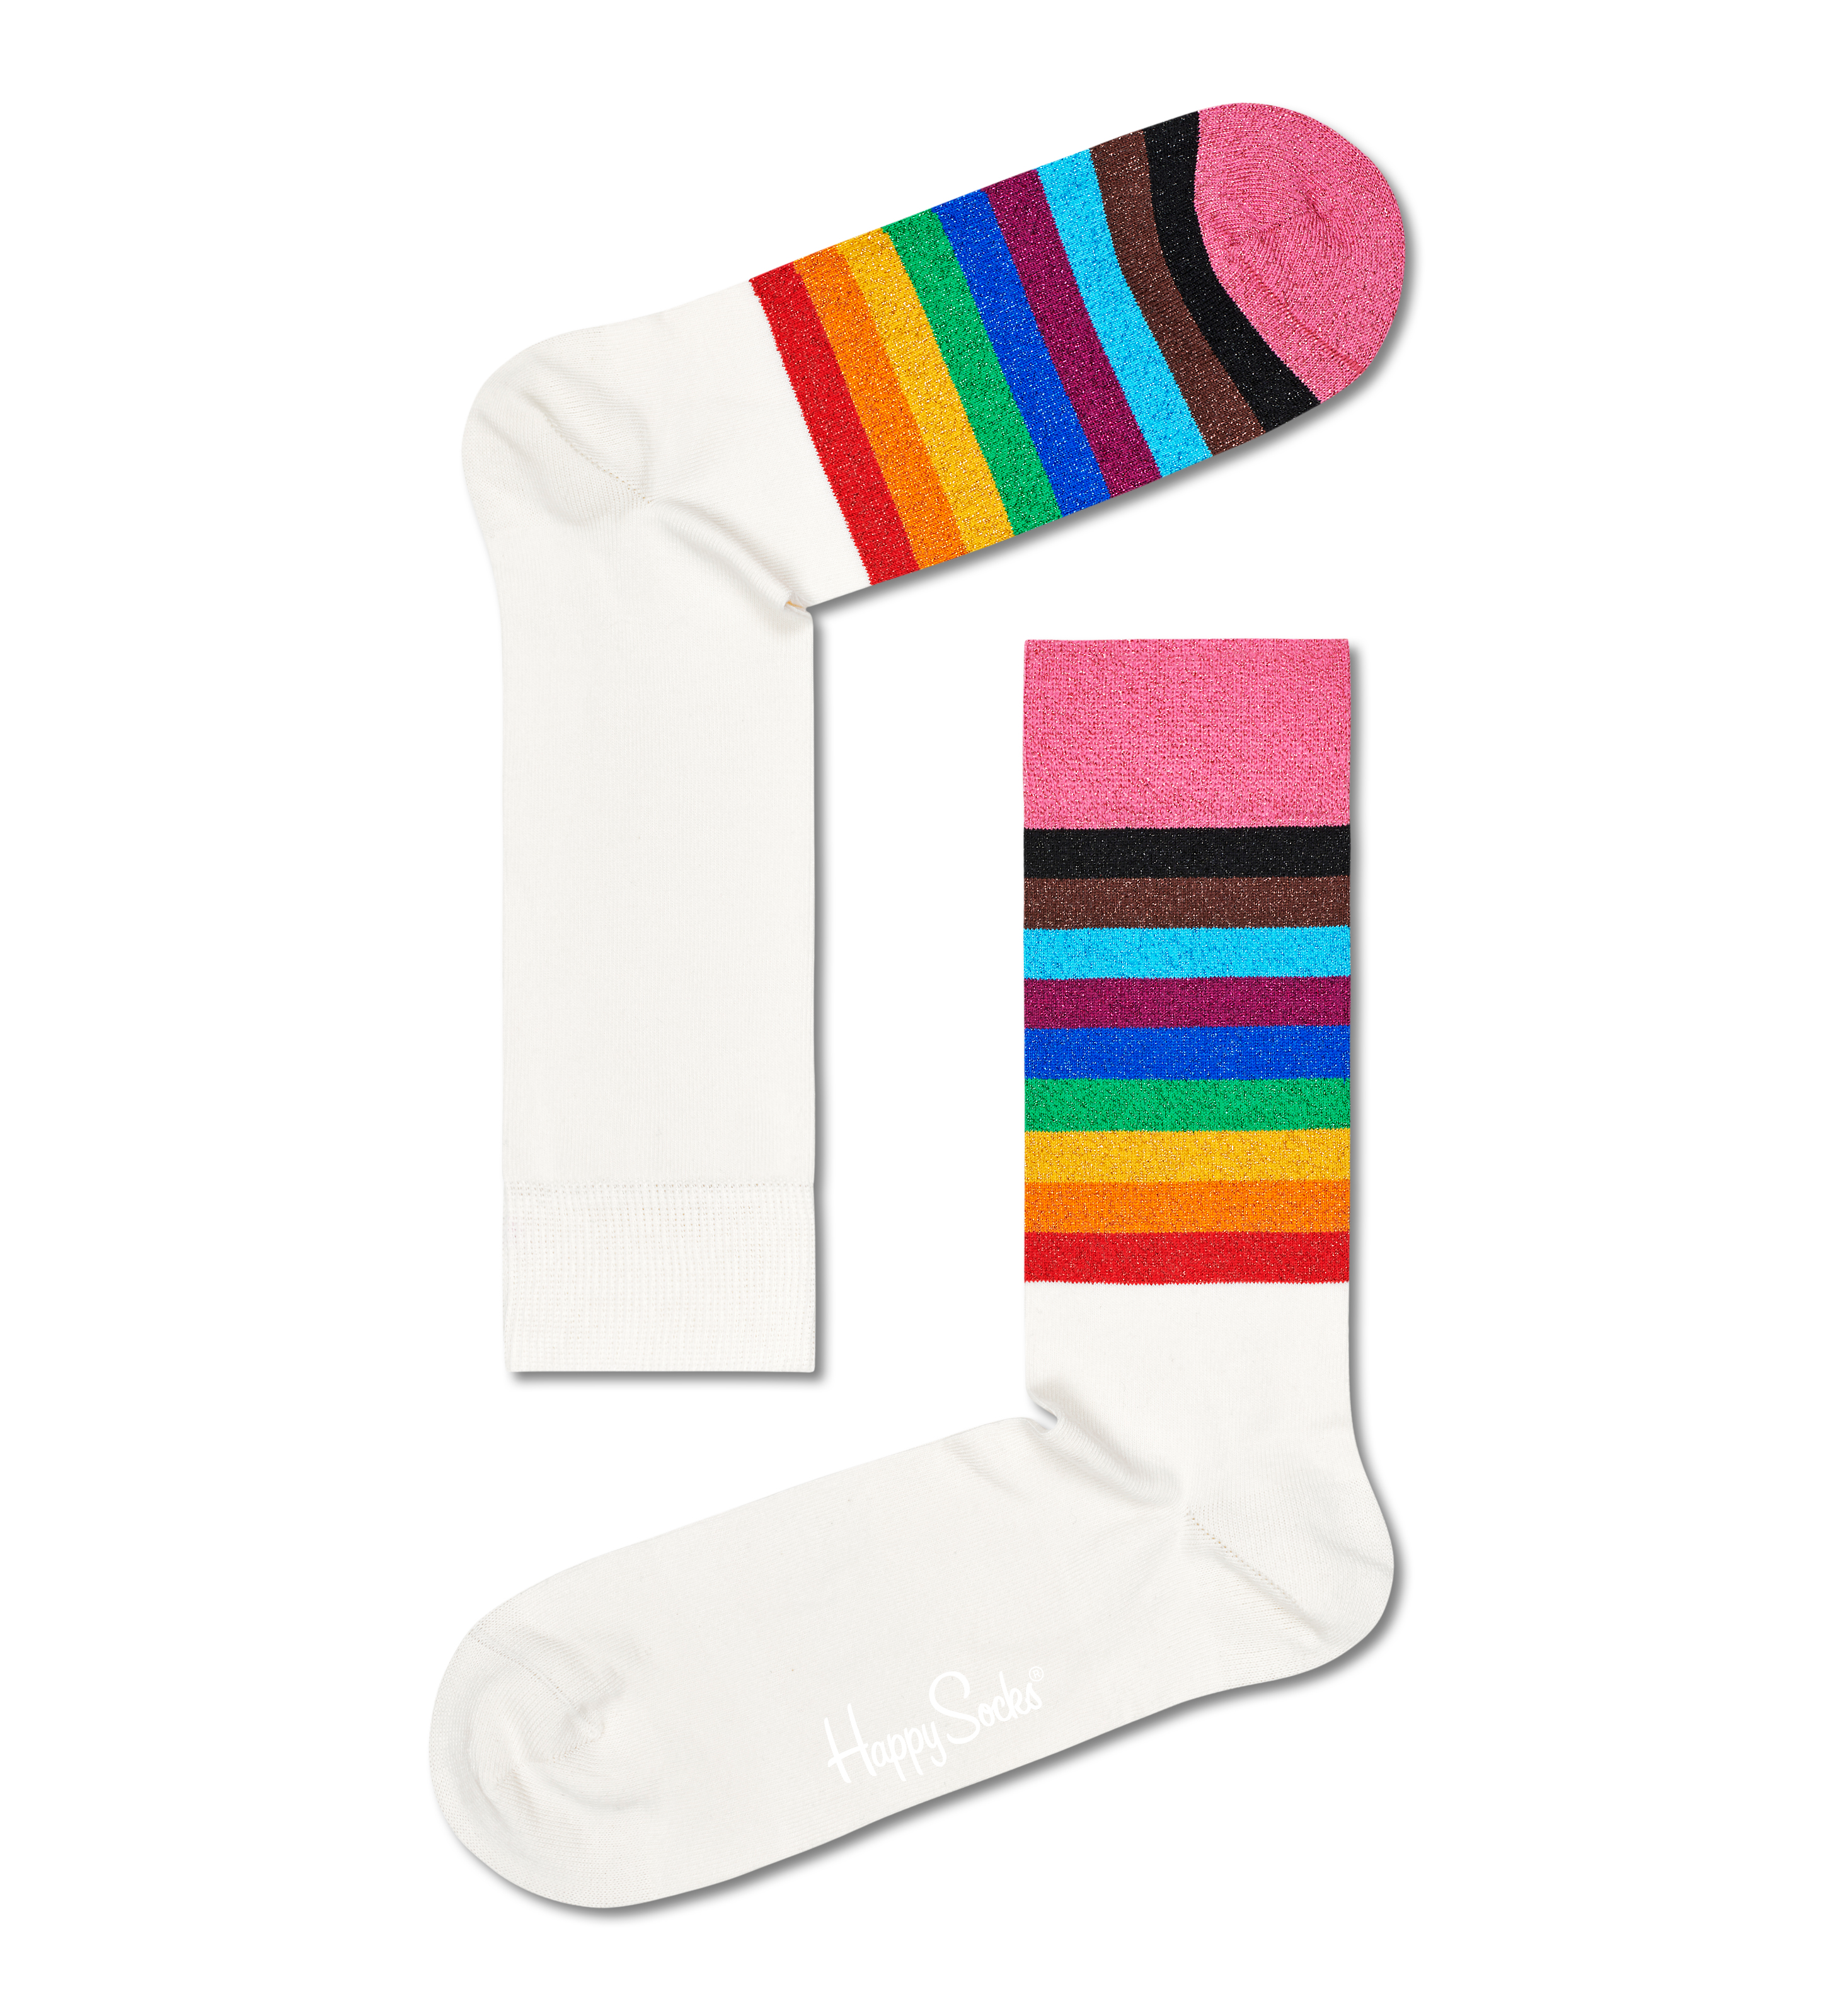 Walk With | Pride, US Socks Pride Shop Socks Happy